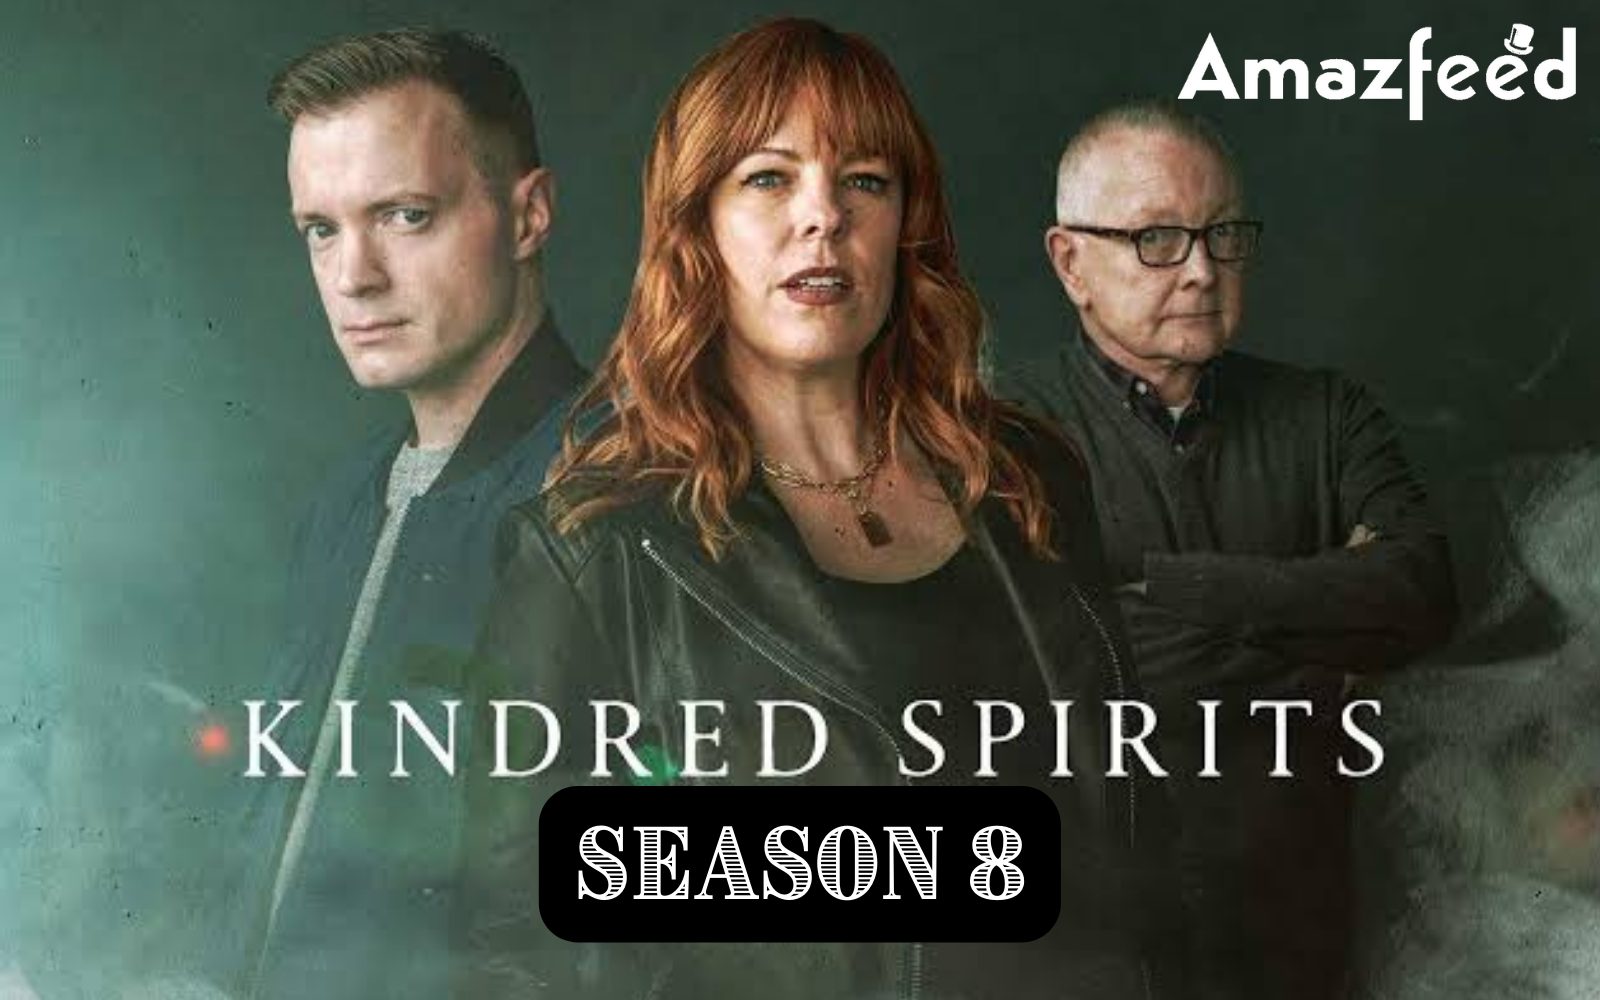 Is Kindred Spirits Season 8 Confirmed? Kindred Spirits Season 8 Release